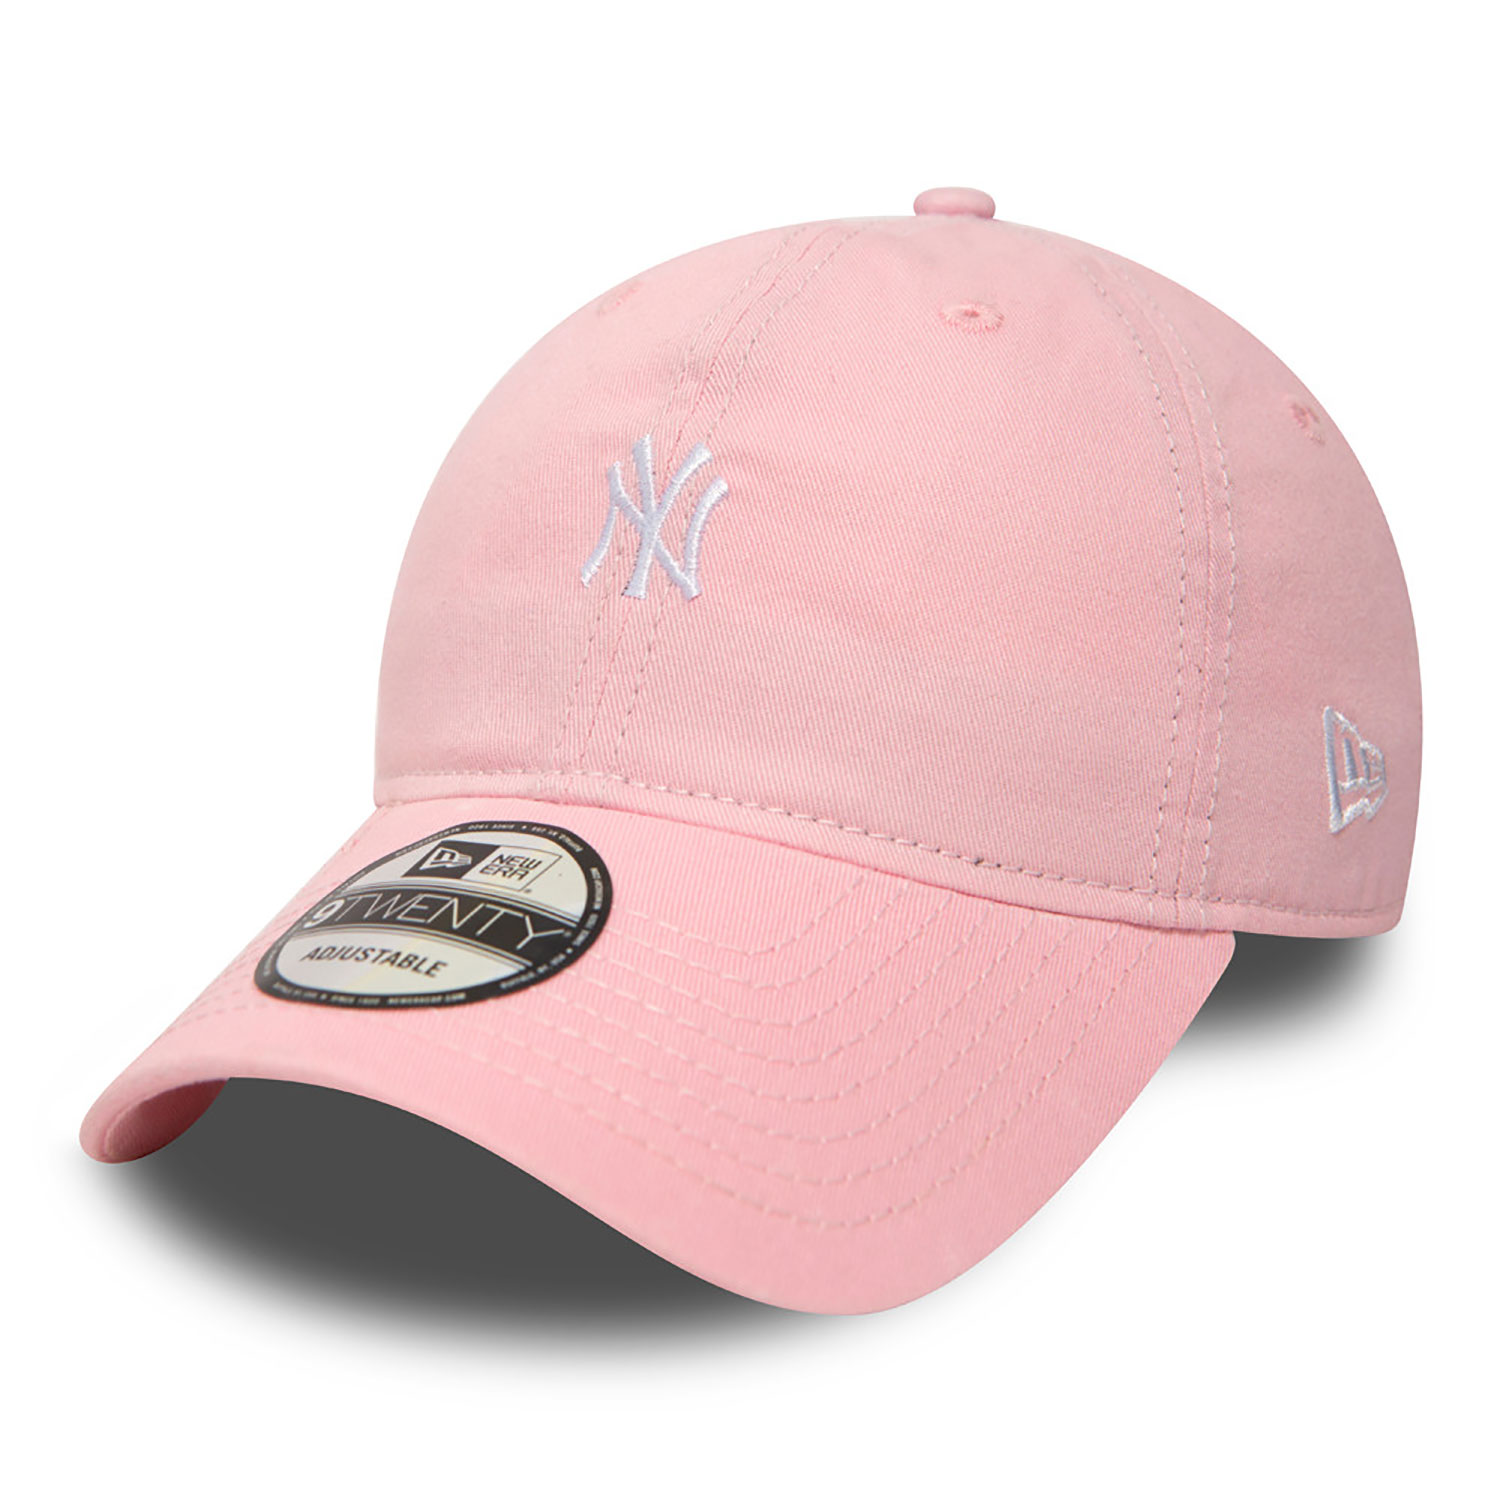 San Antonio Spurs Women's New Era Pink and Cream 9TWENTY Micro Cap